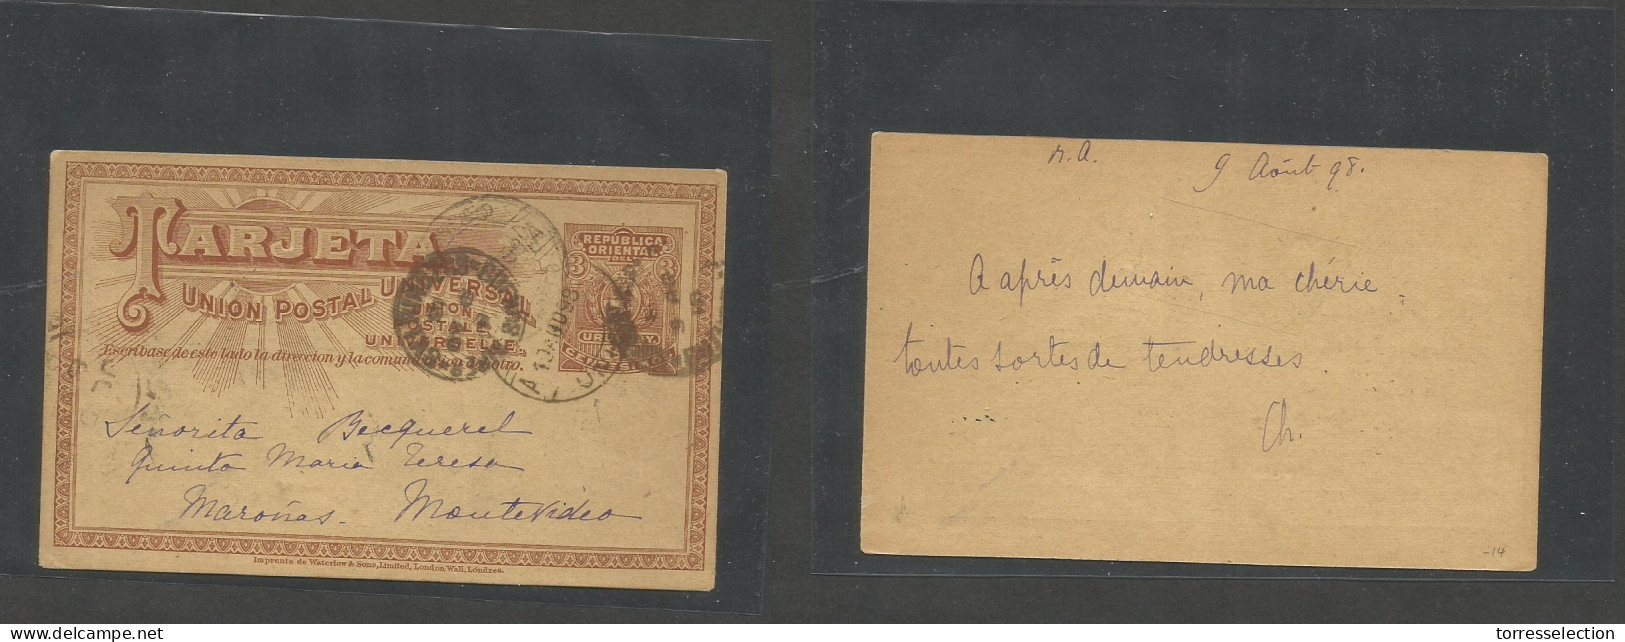 URUGUAY. 1898 (9 Aug) Union - Montevideo, Maroñas. 3c Brown Illustr Stat Card Transited Internally. SALE. - Uruguay